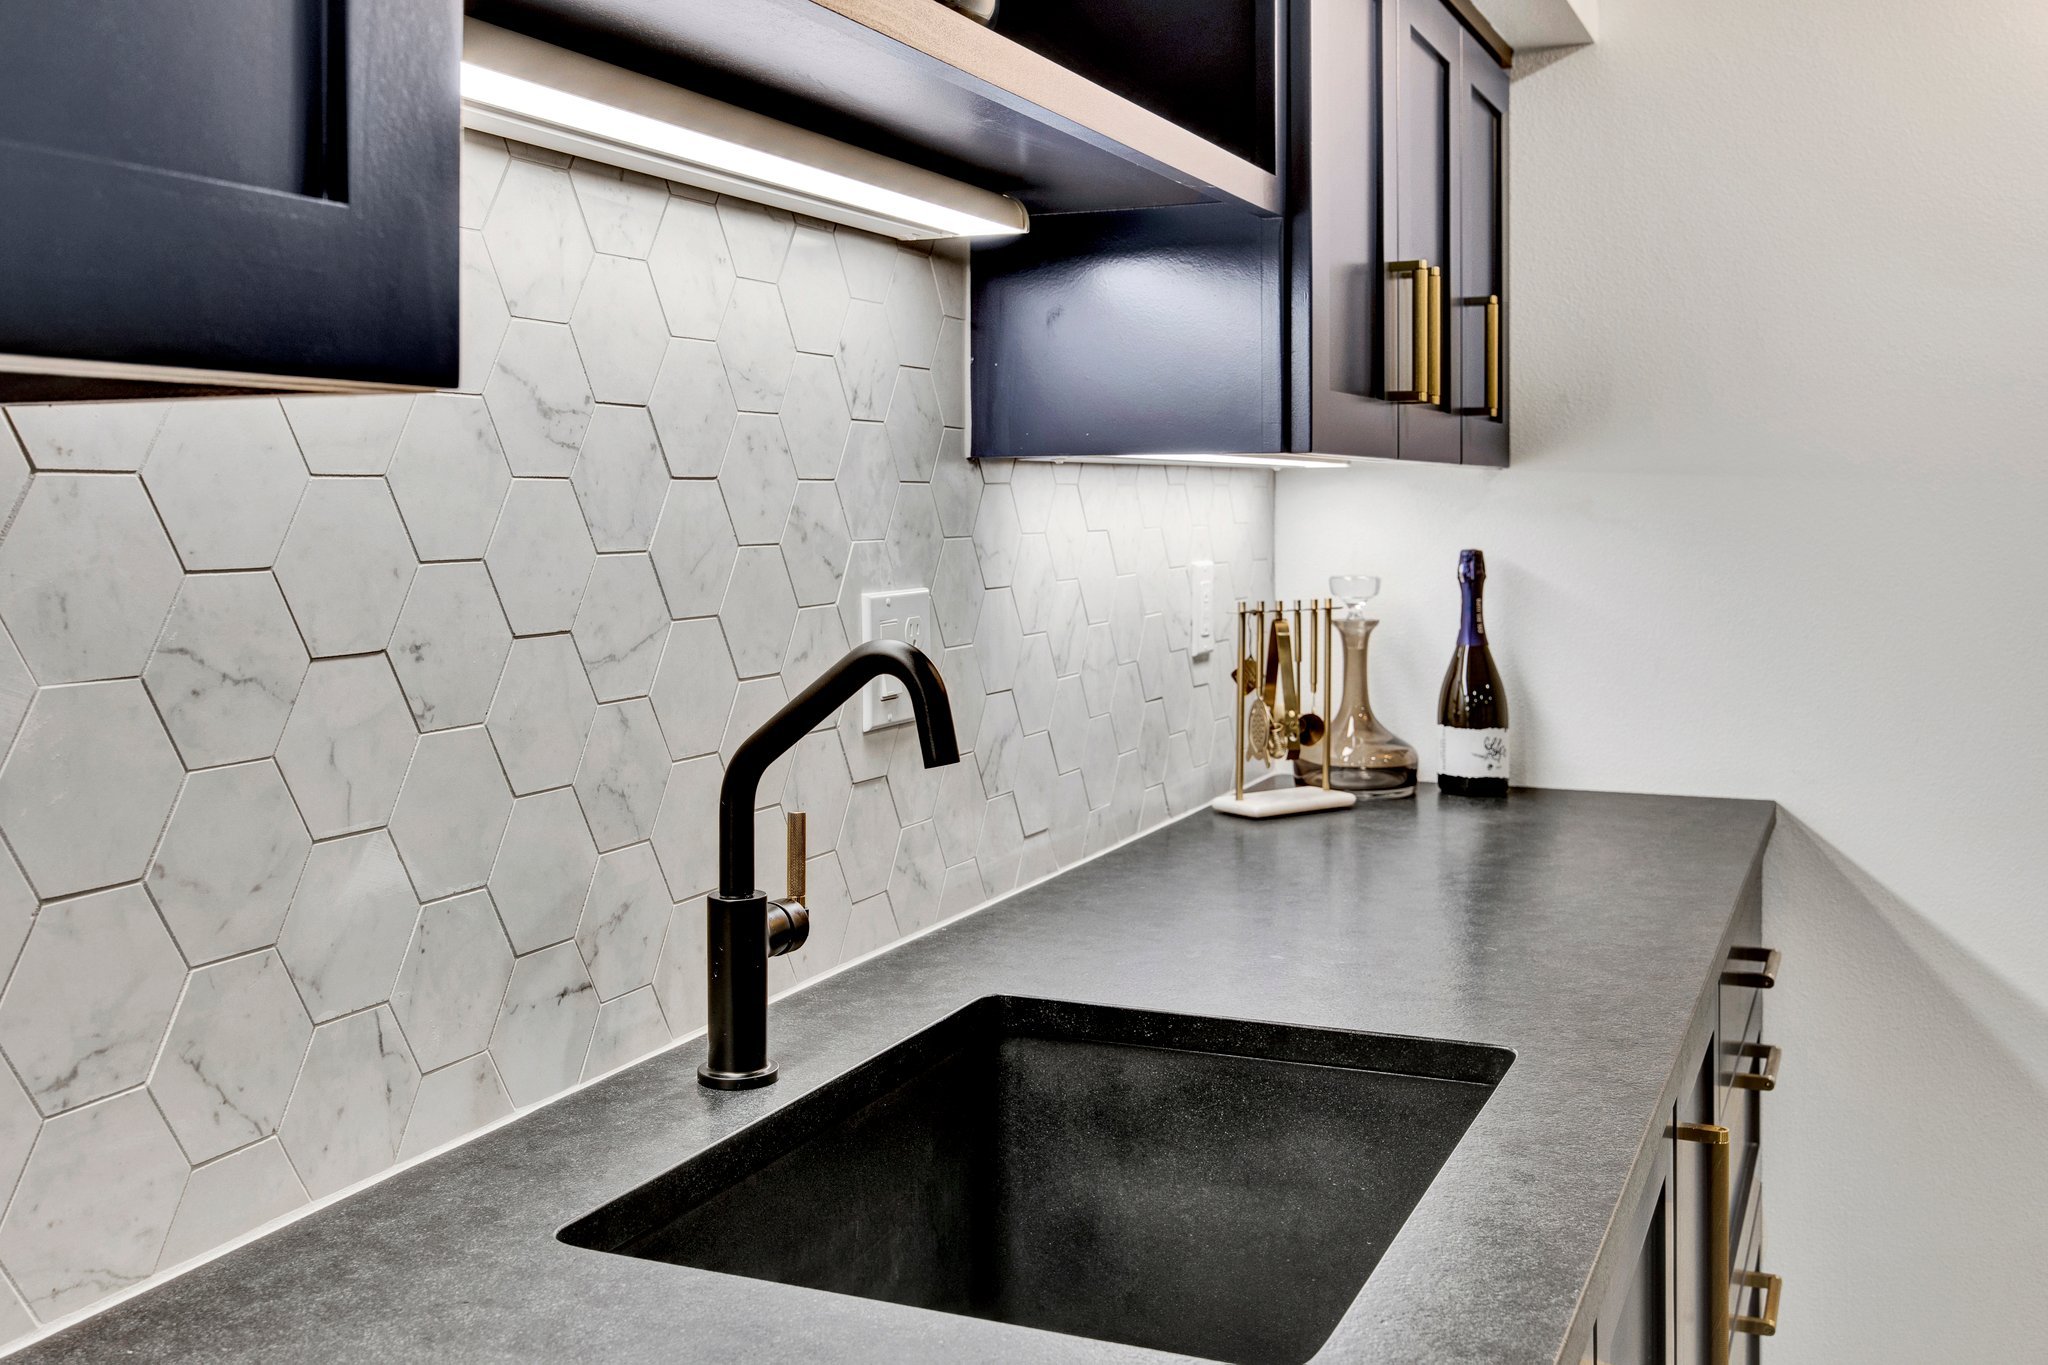 Cooper-Design-Build-Countertop-with tile backsplash